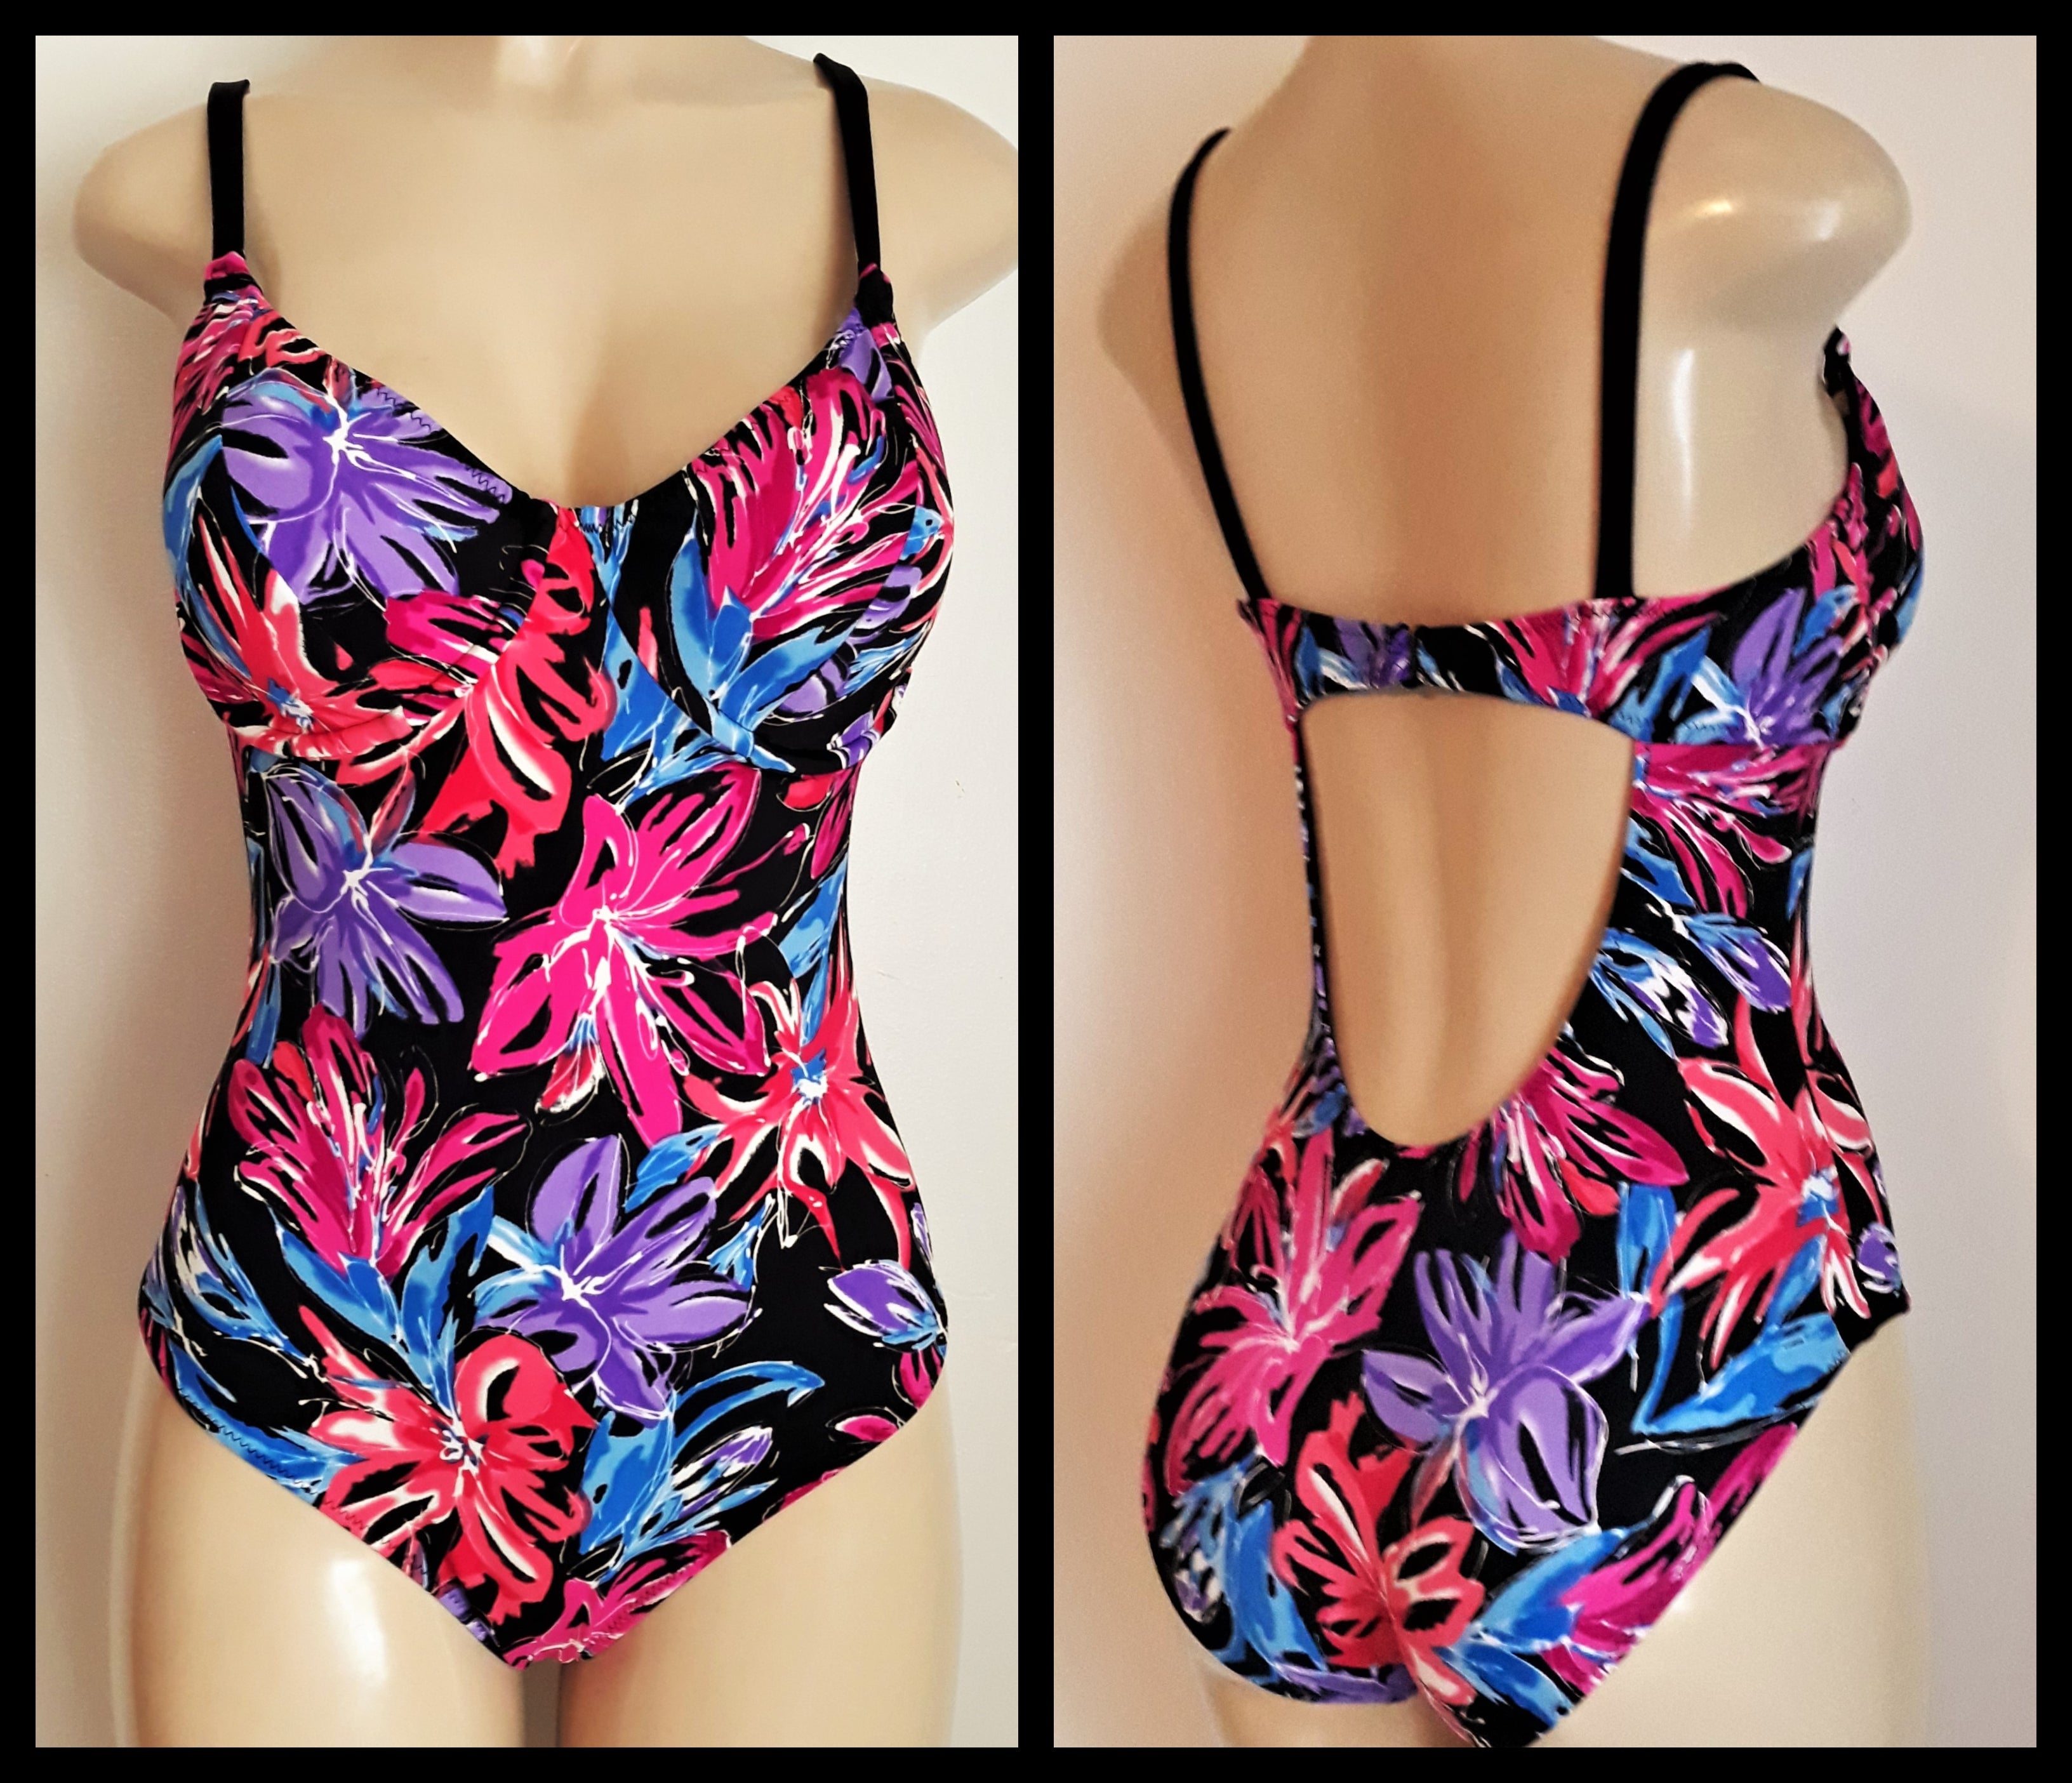 MirasolSwimwear Halter Bikini Tops